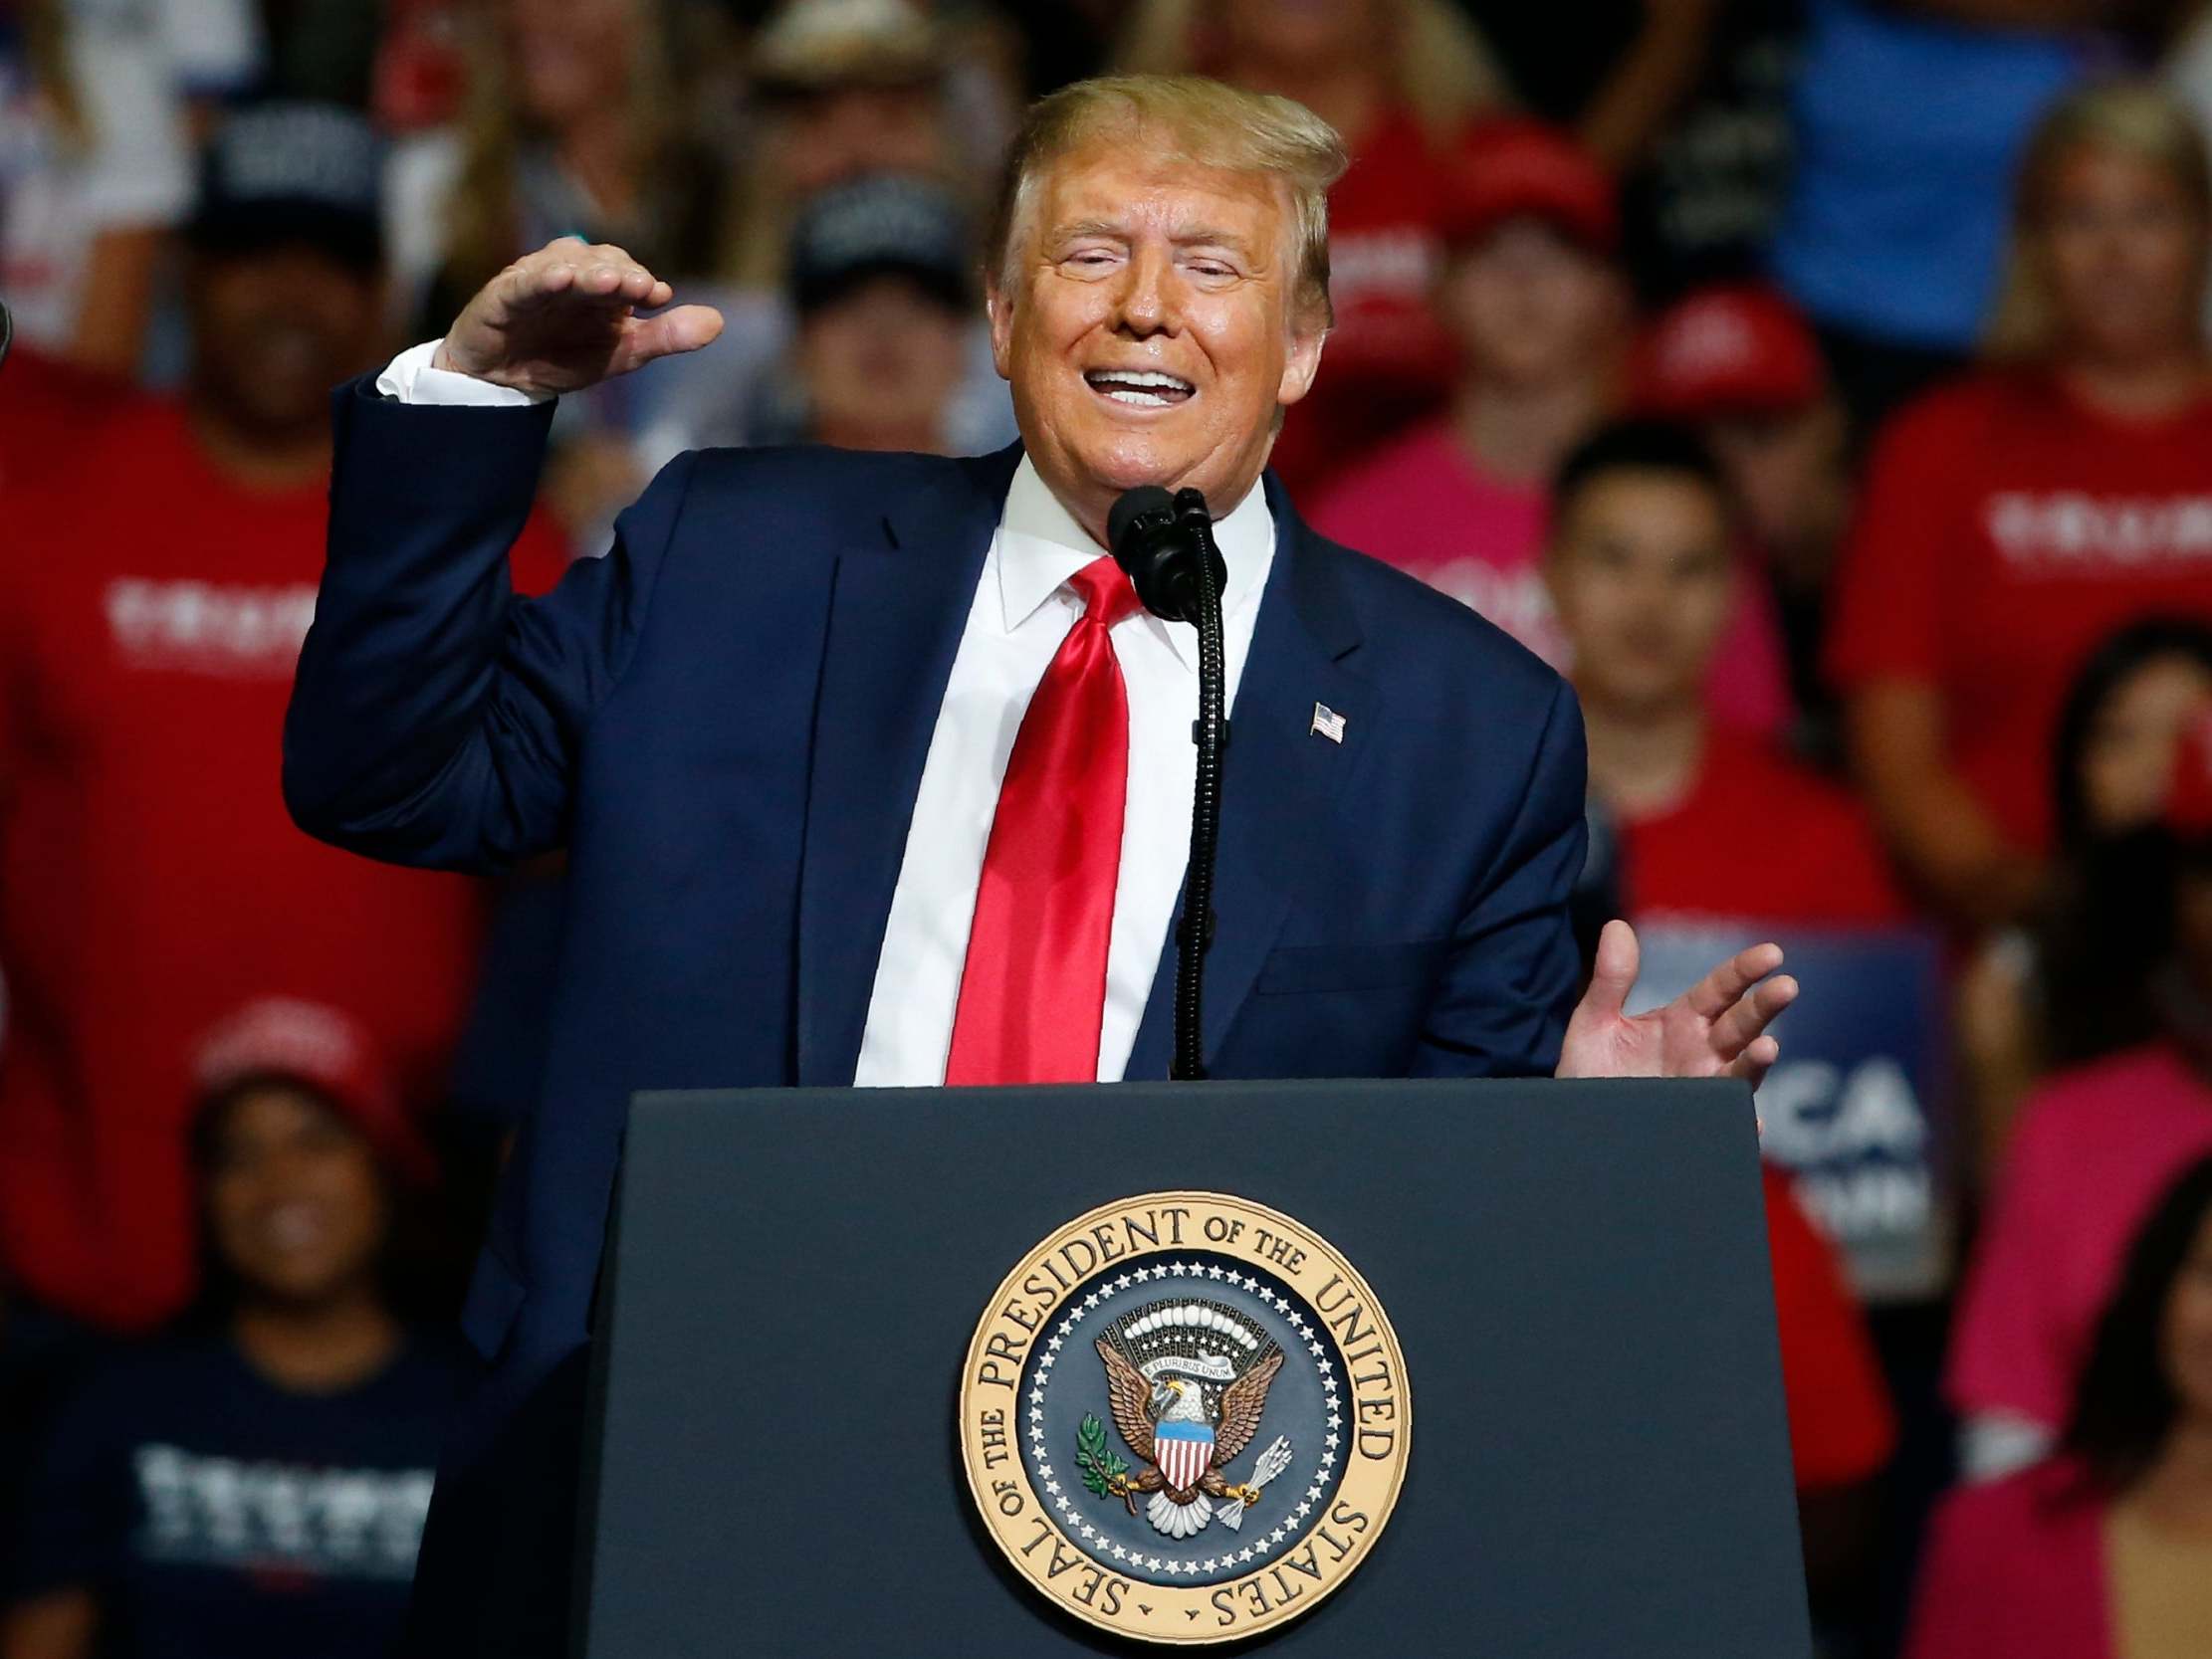 Trump's rally did far more damage than good